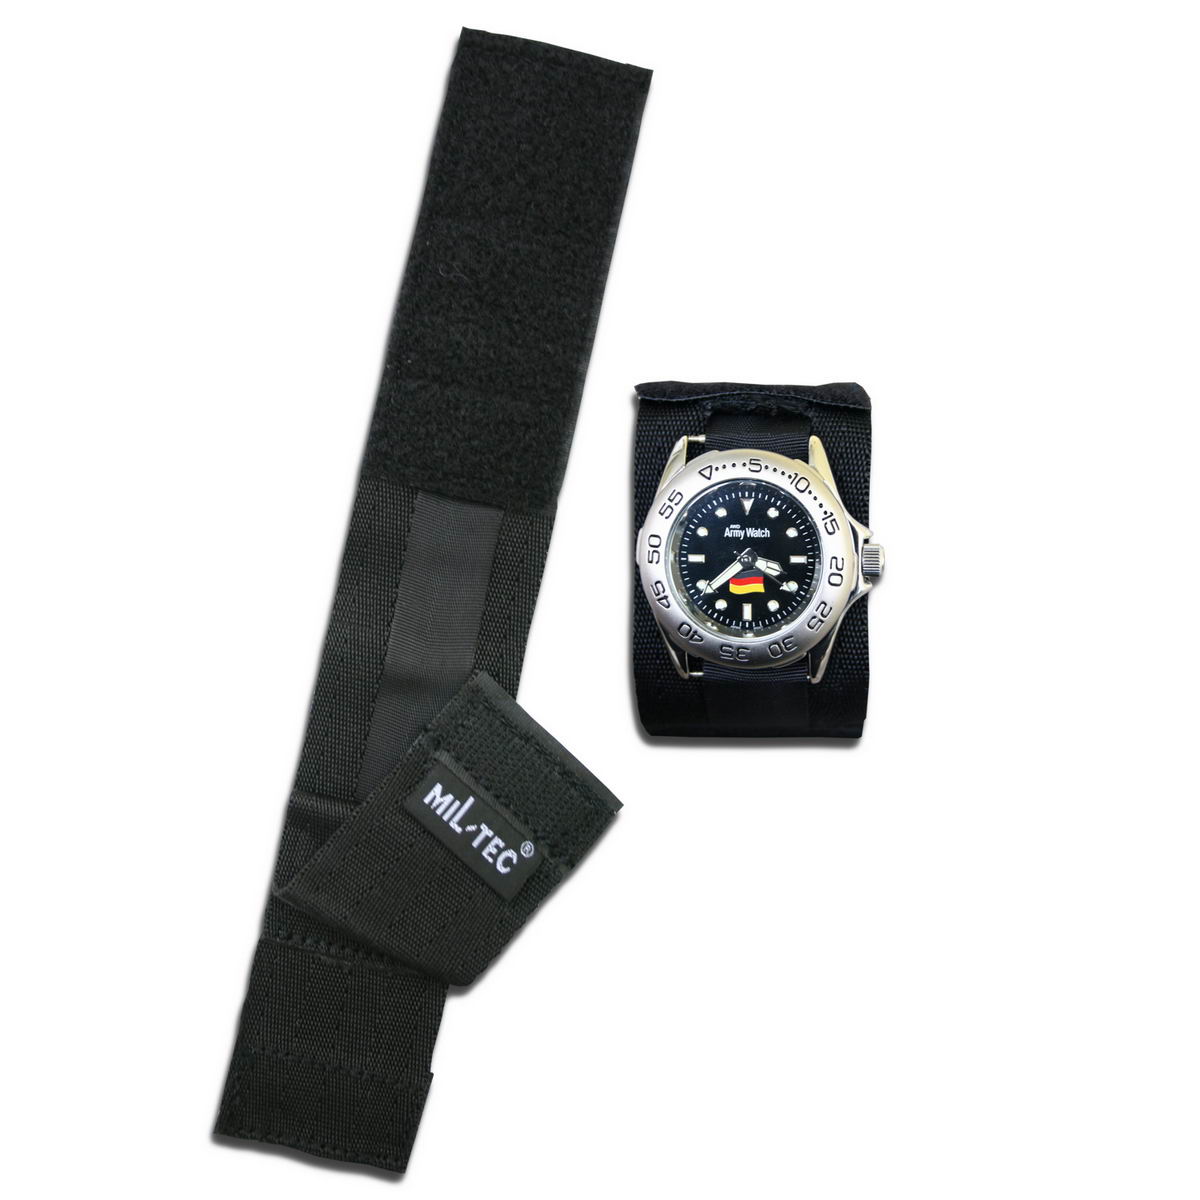 Uhren Armband Uhrenarmband Bw BUNDeswehr oliv cordura aus Sicherheitsgurt